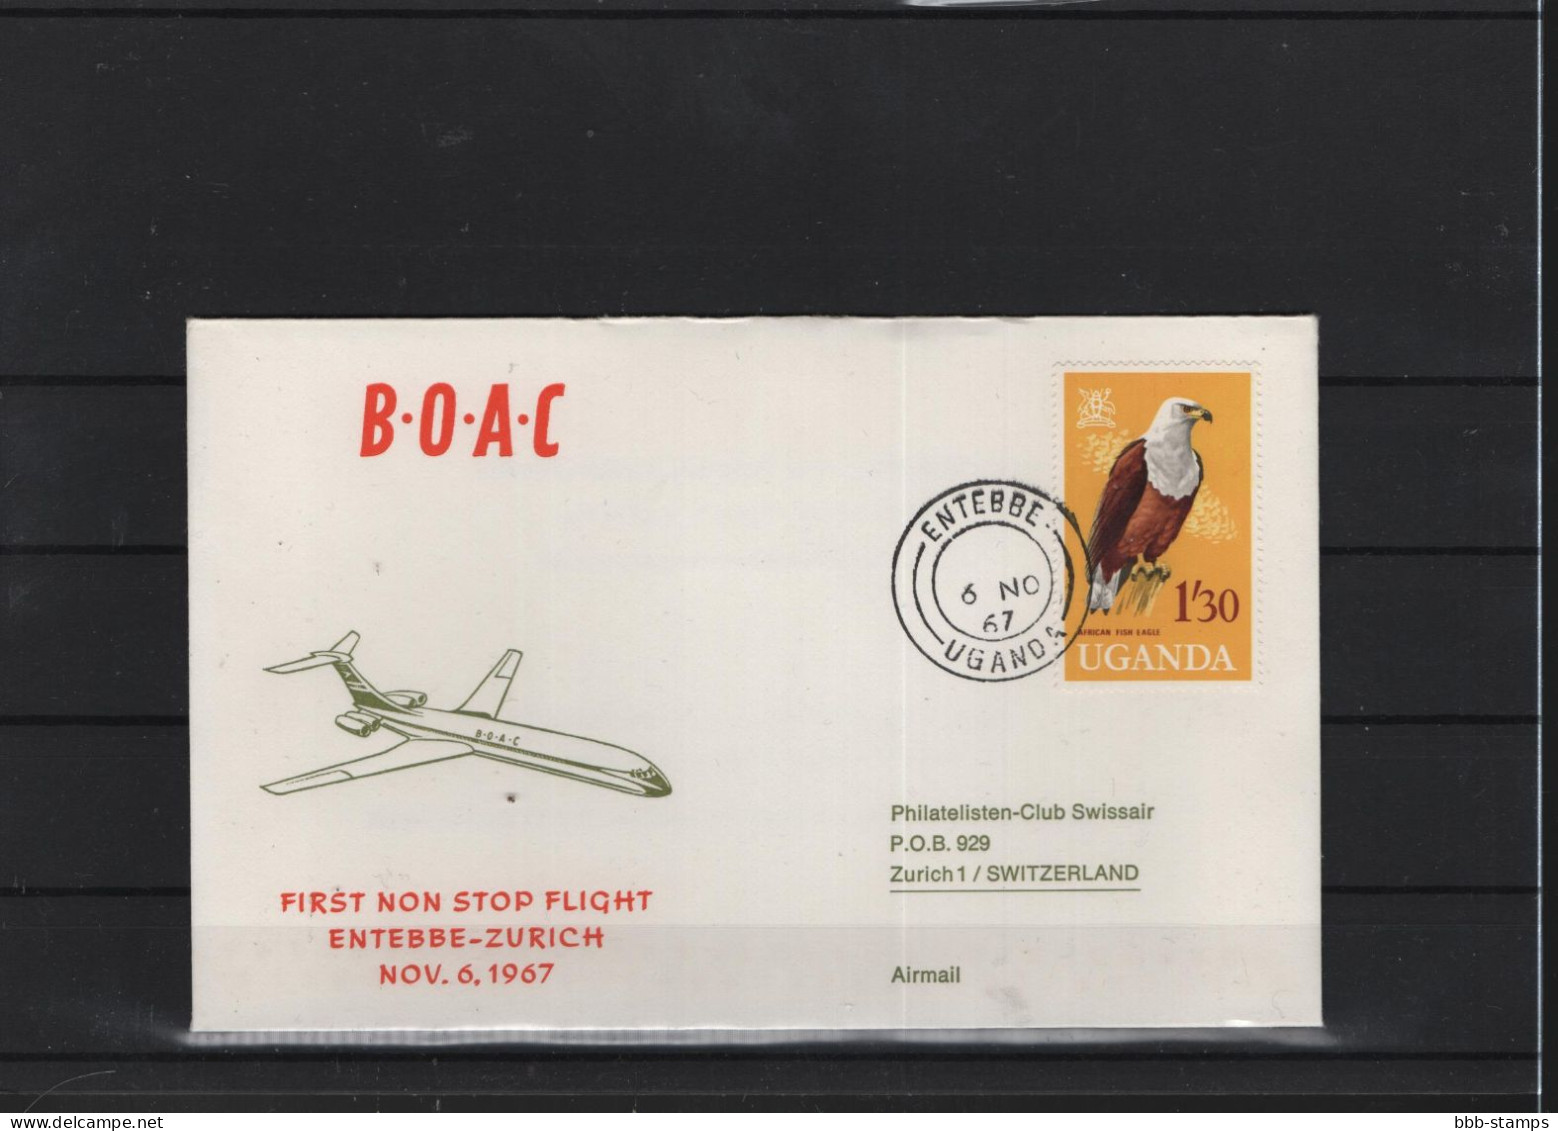 Schweiz Luftpost FFC BOAC 6.11.1966 Entebbe - Zürich - First Flight Covers